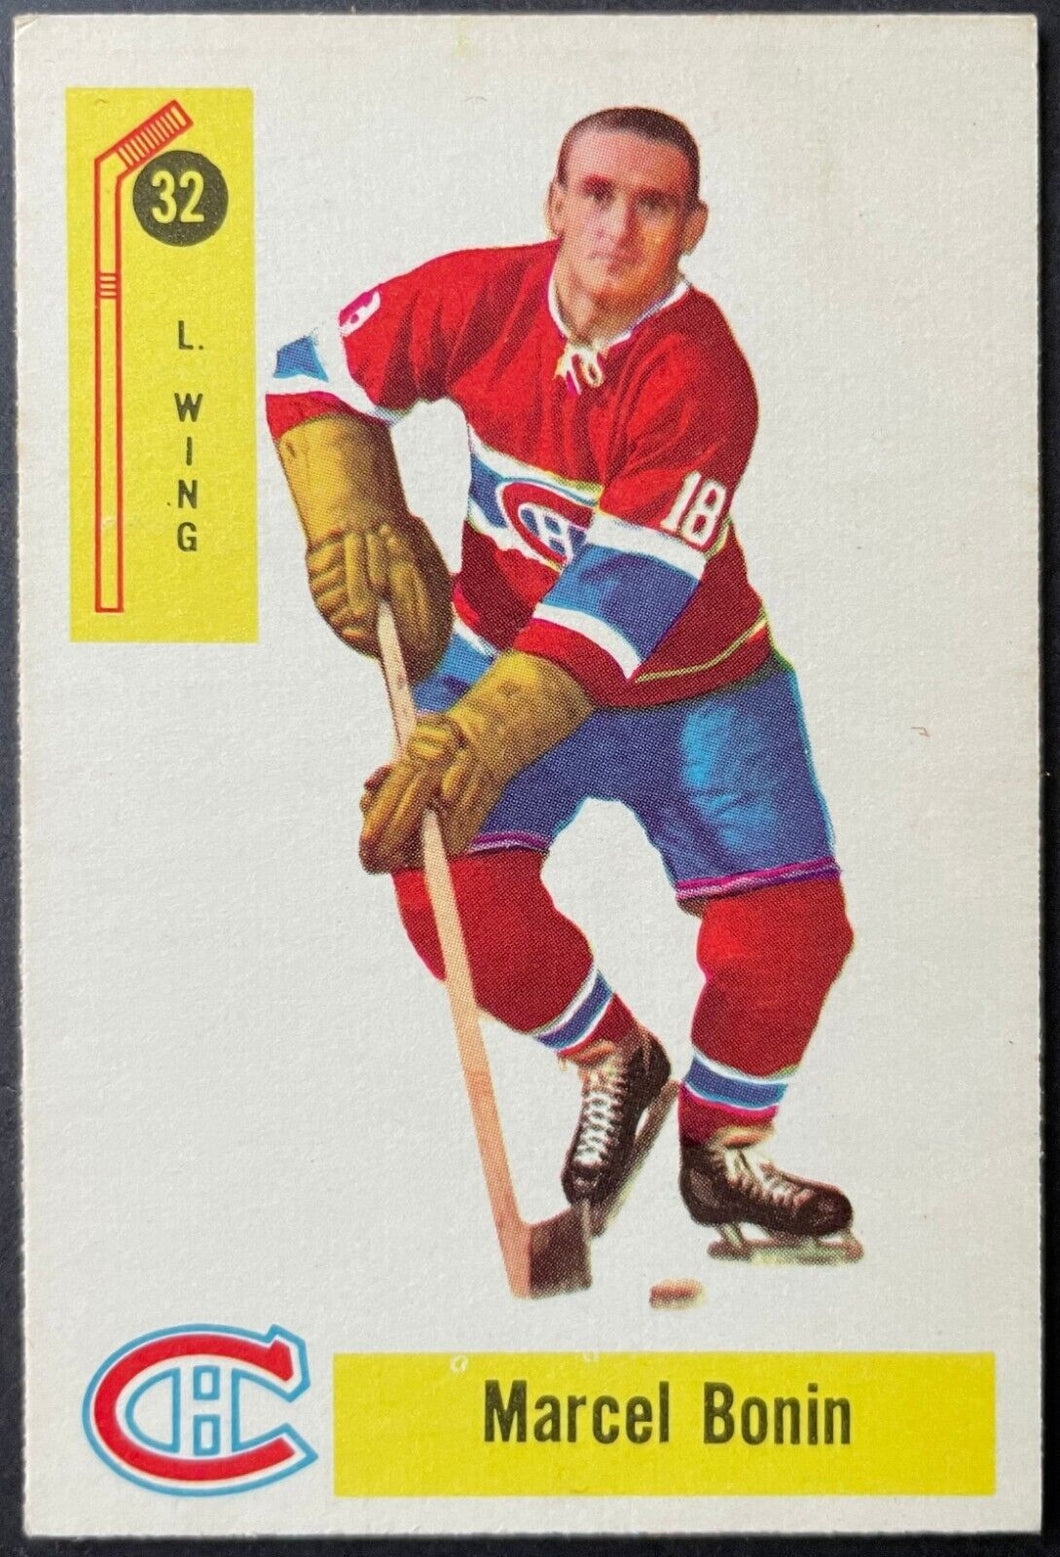 1958-59 Parkhurst Hockey Card #32 Marcel Bonin Montreal Canadiens NHL